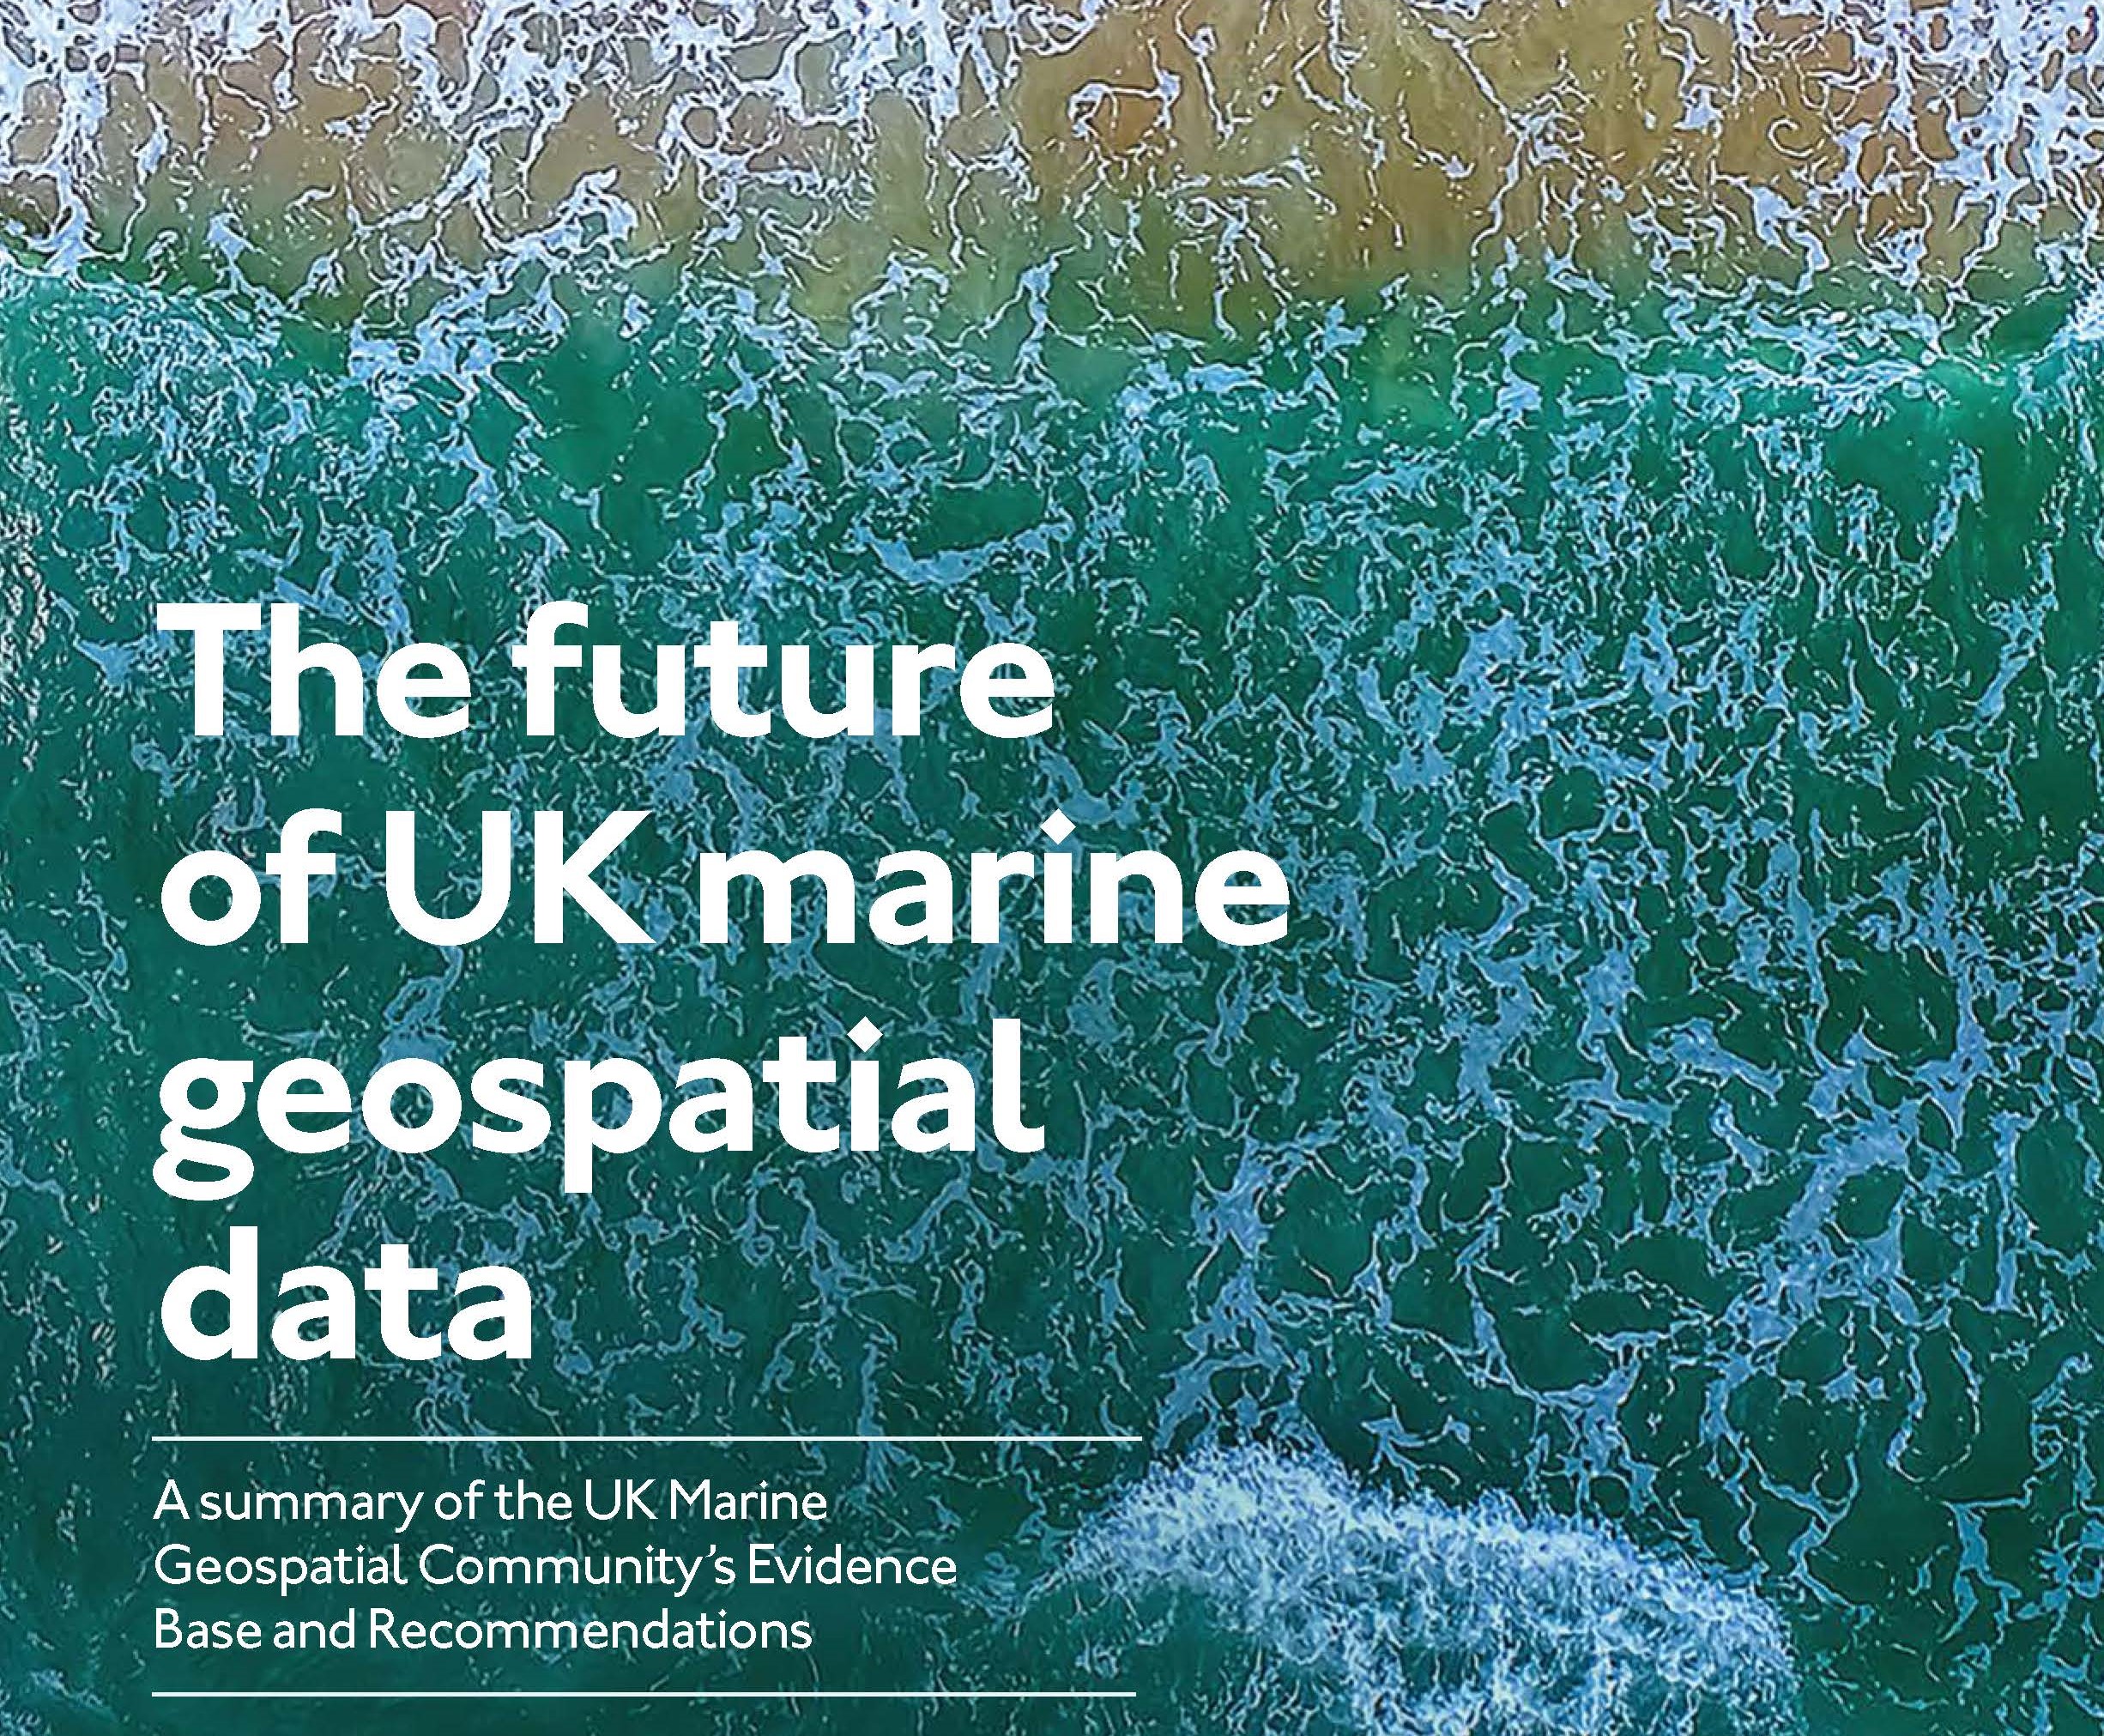 sea washing up onto sandy beach shoreline with text The future of UK marine geospatial data